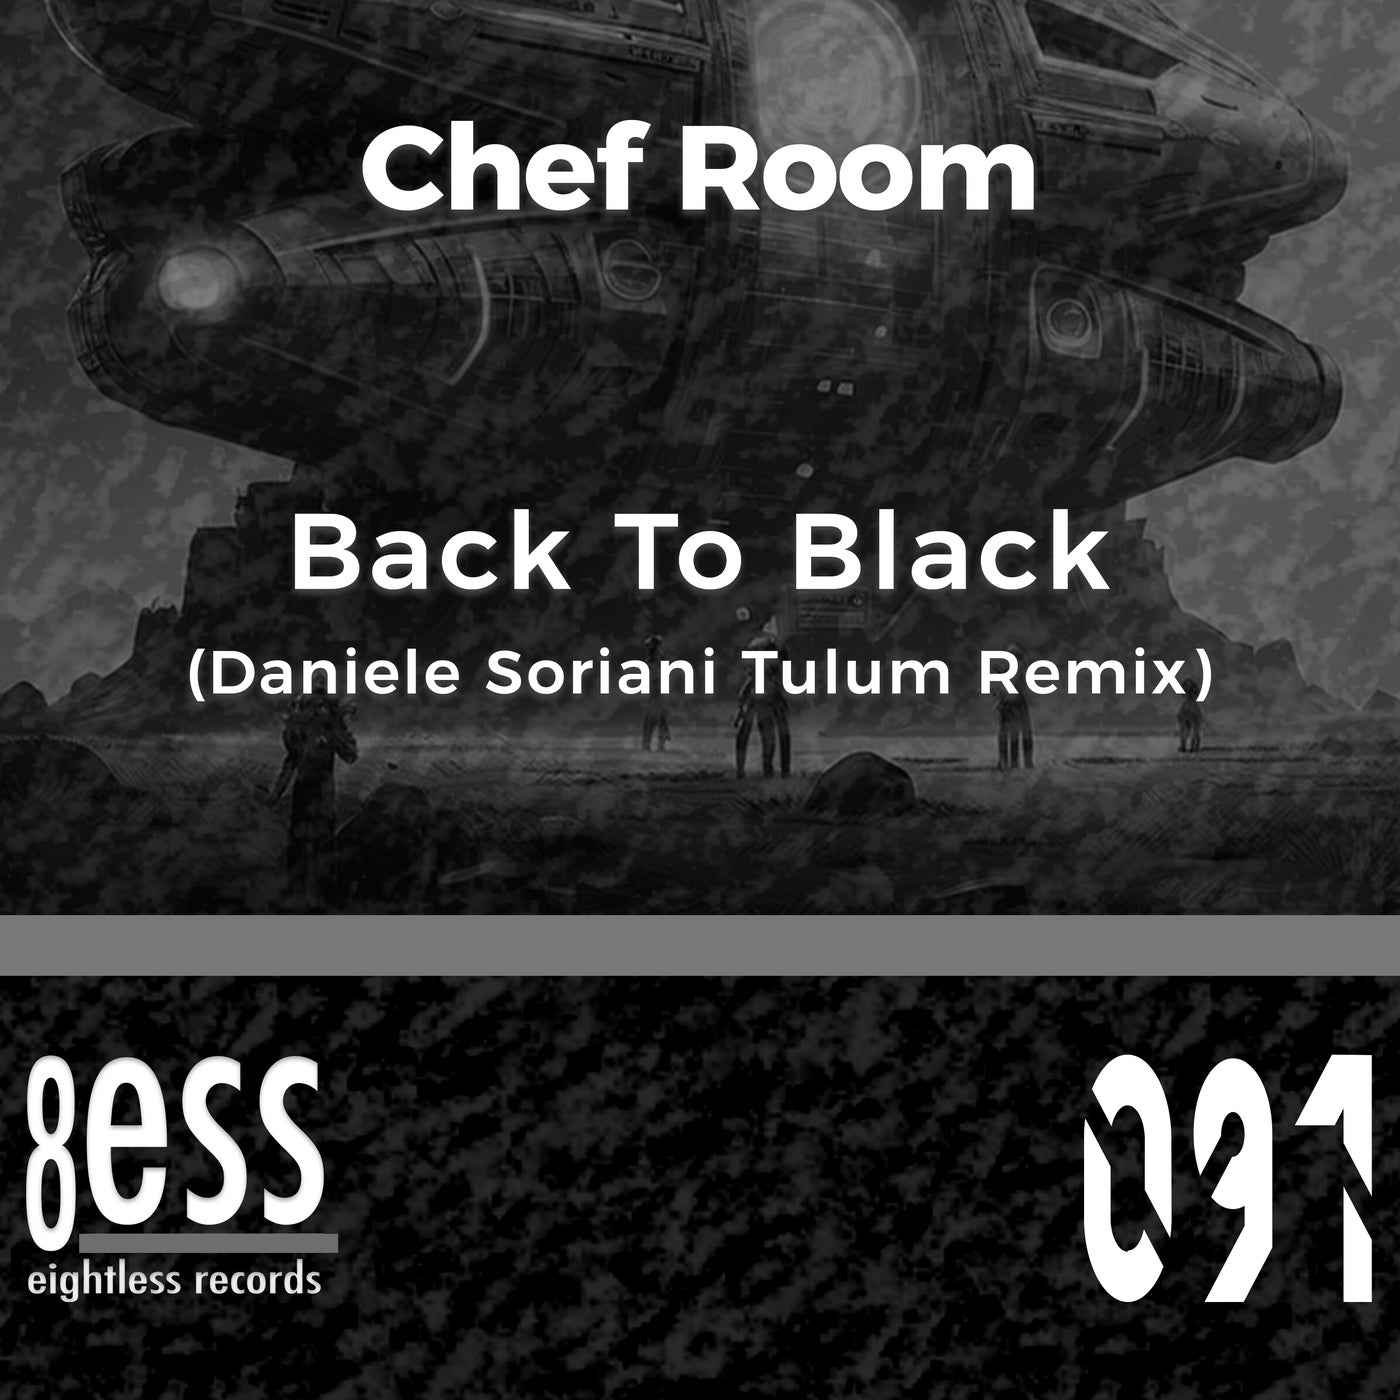 Back To Black (Daniele Soriani Tulum Remix)